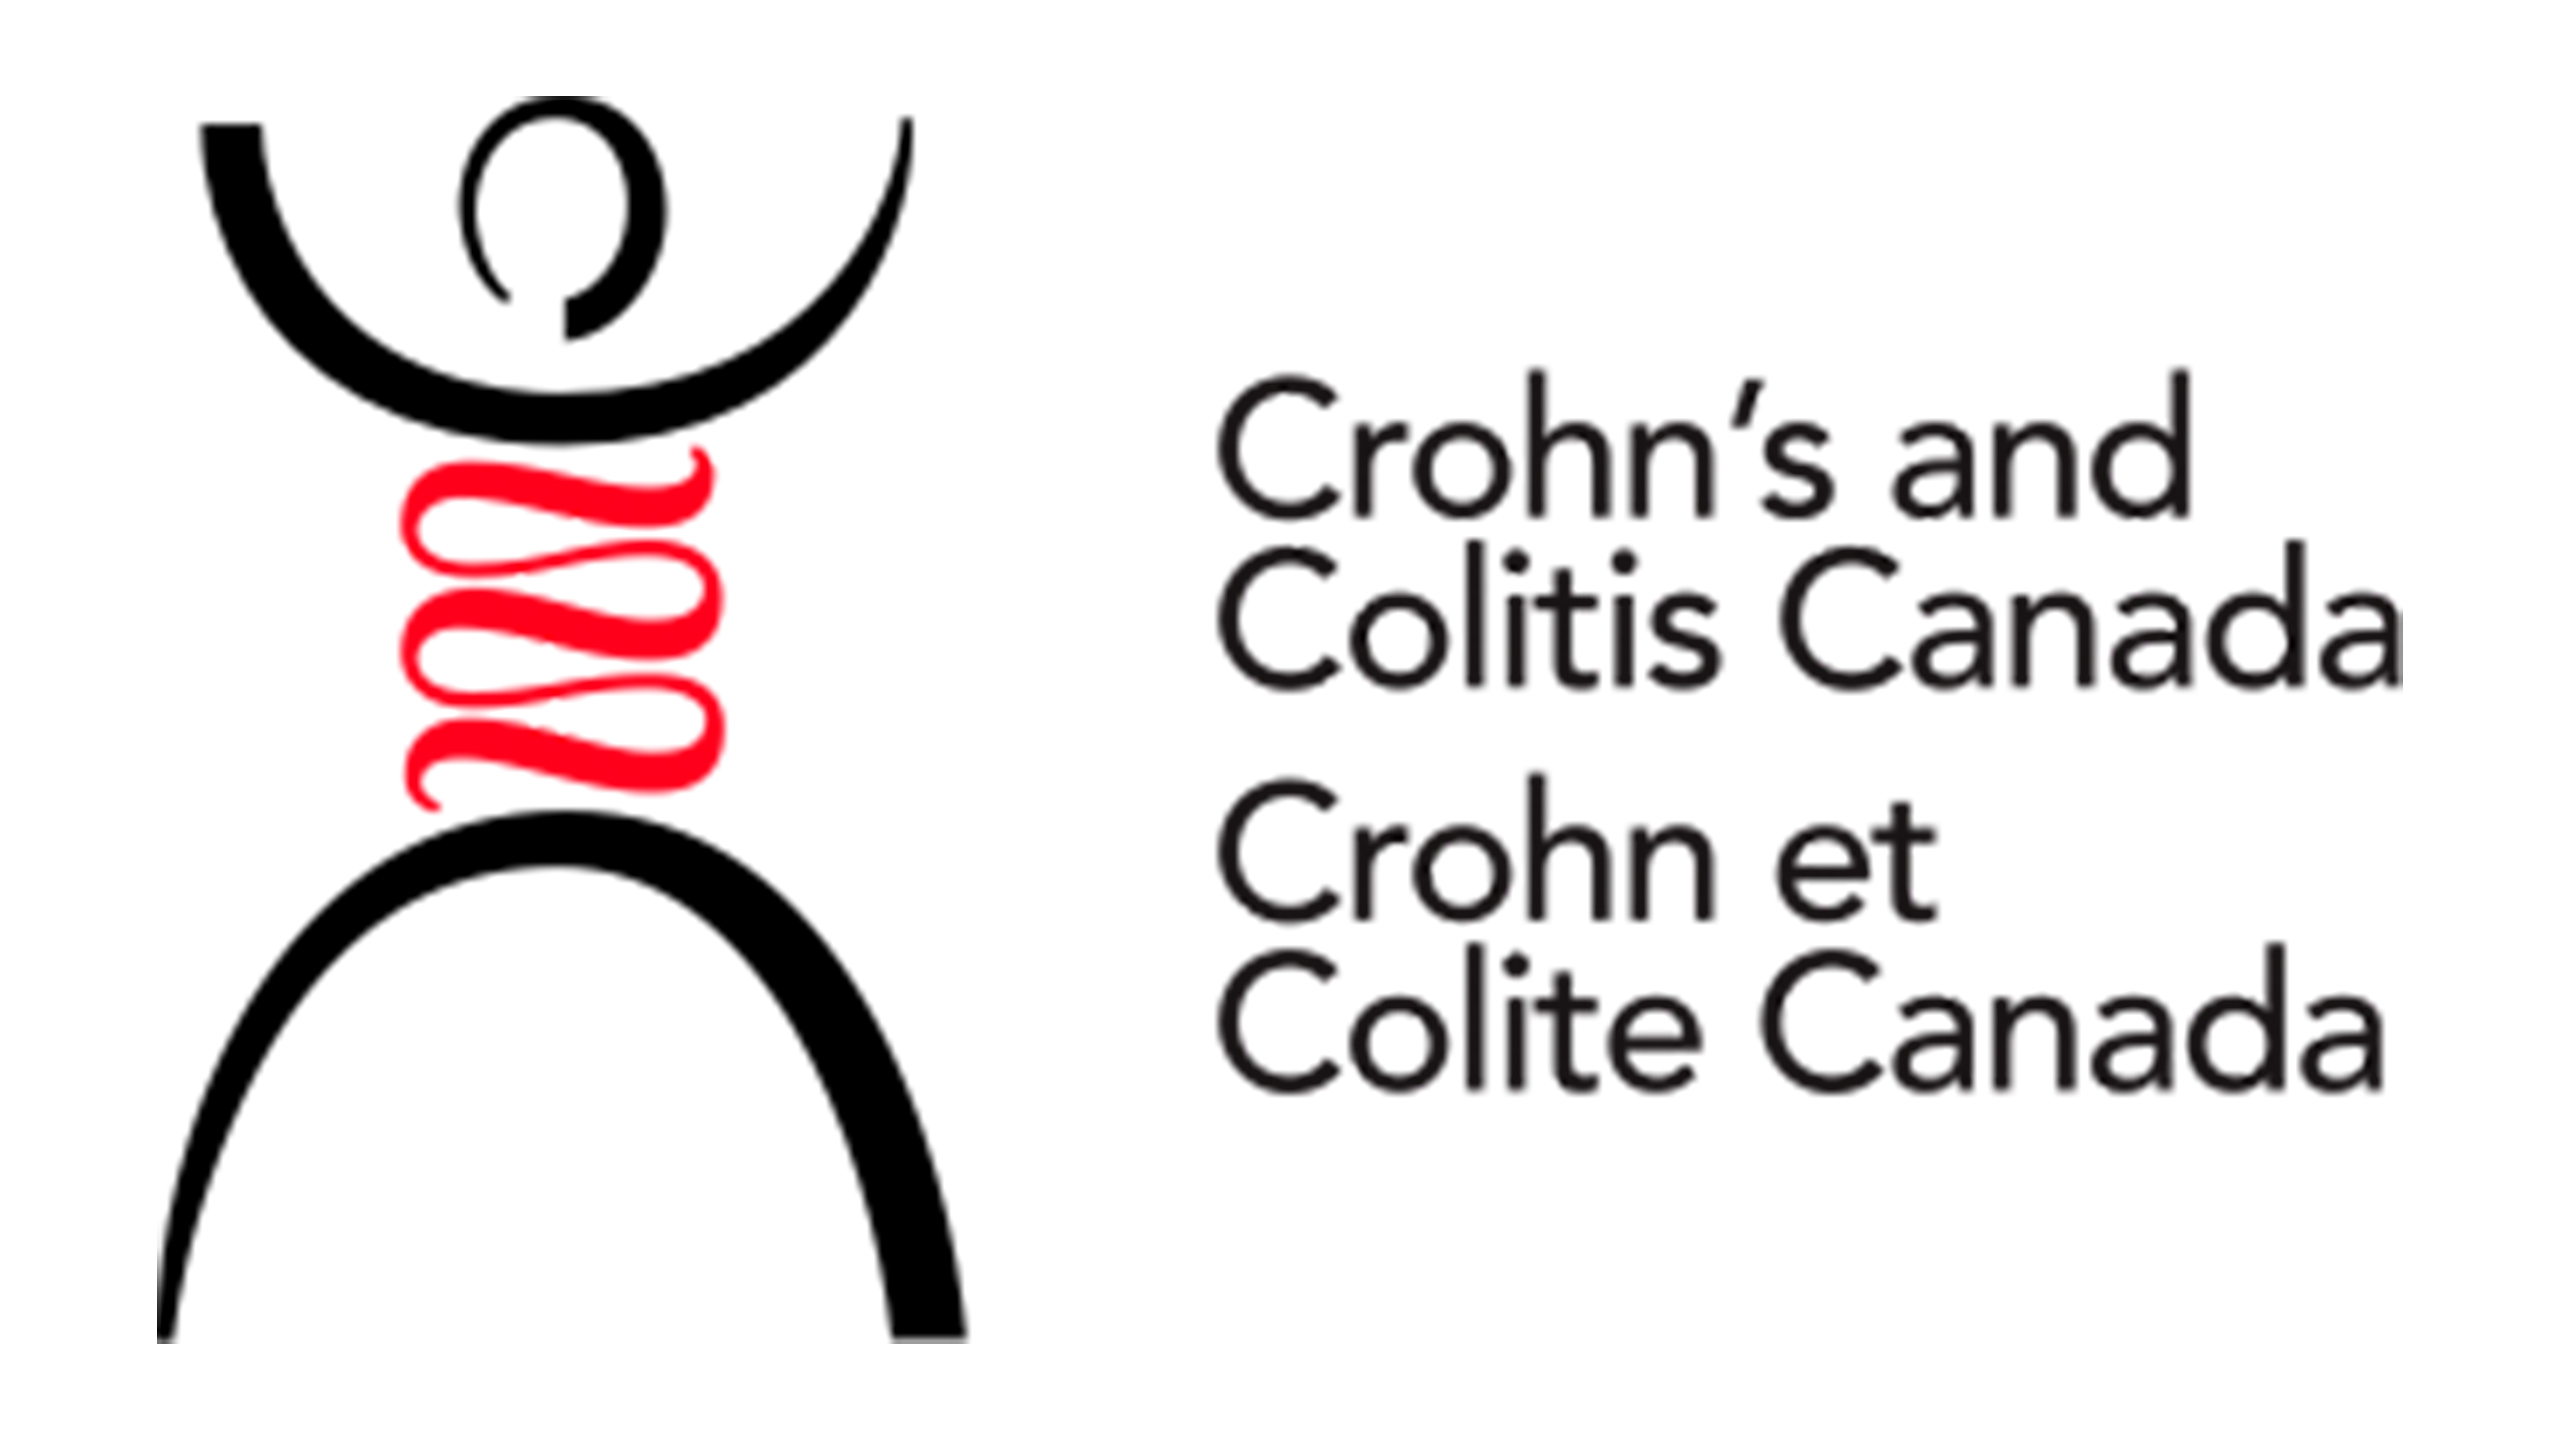 the logo of the company Crohn's and Colitis Canada